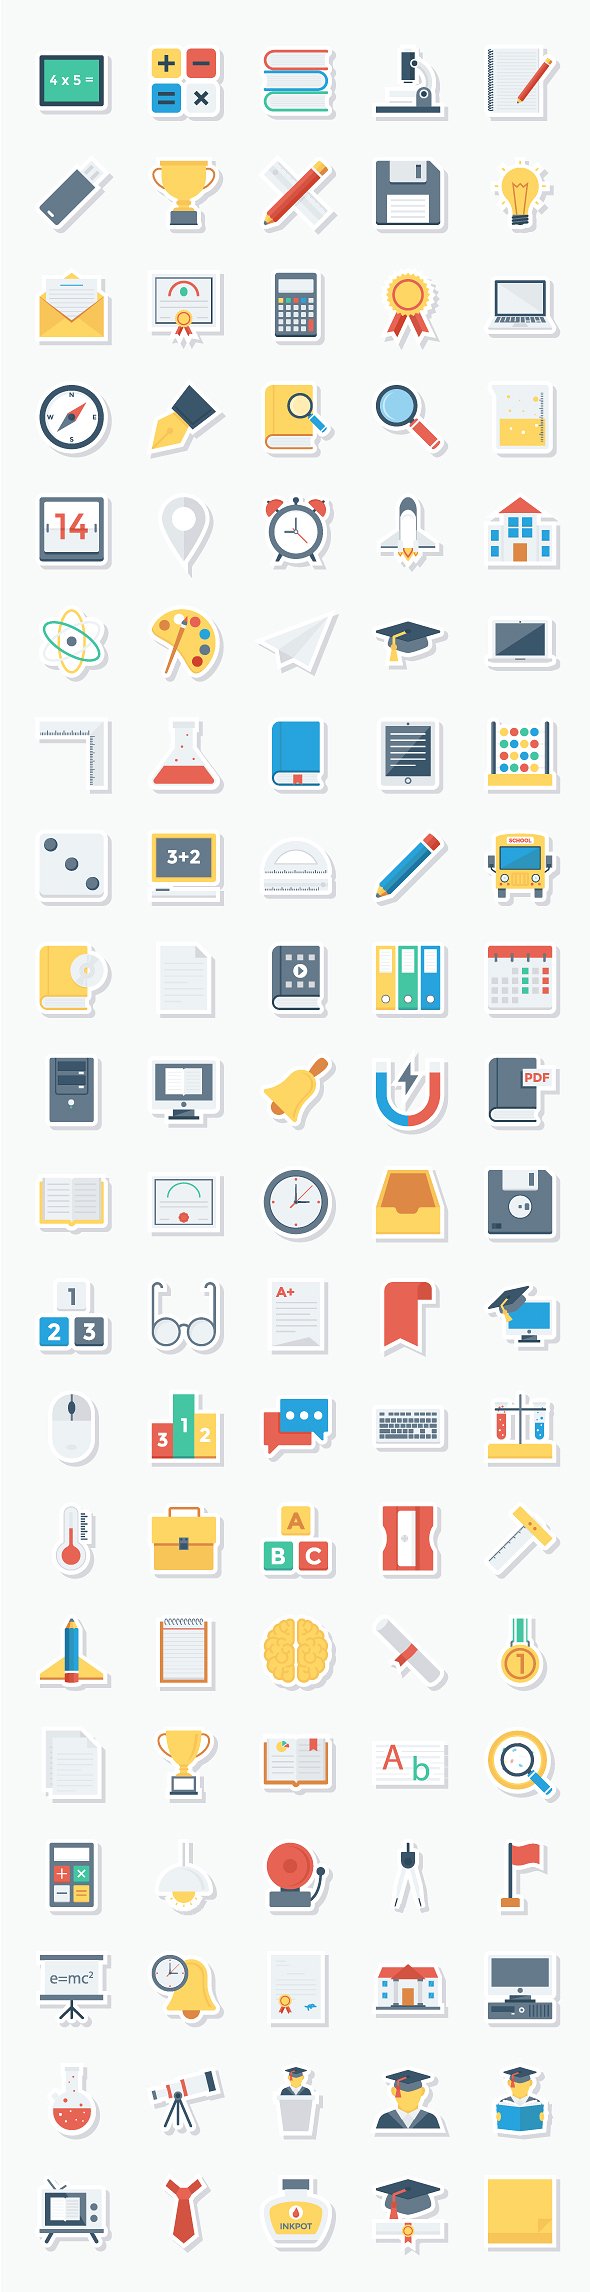 1200枚教育主题图标 Educational 1200 Icons Bundle Pack插图(4)